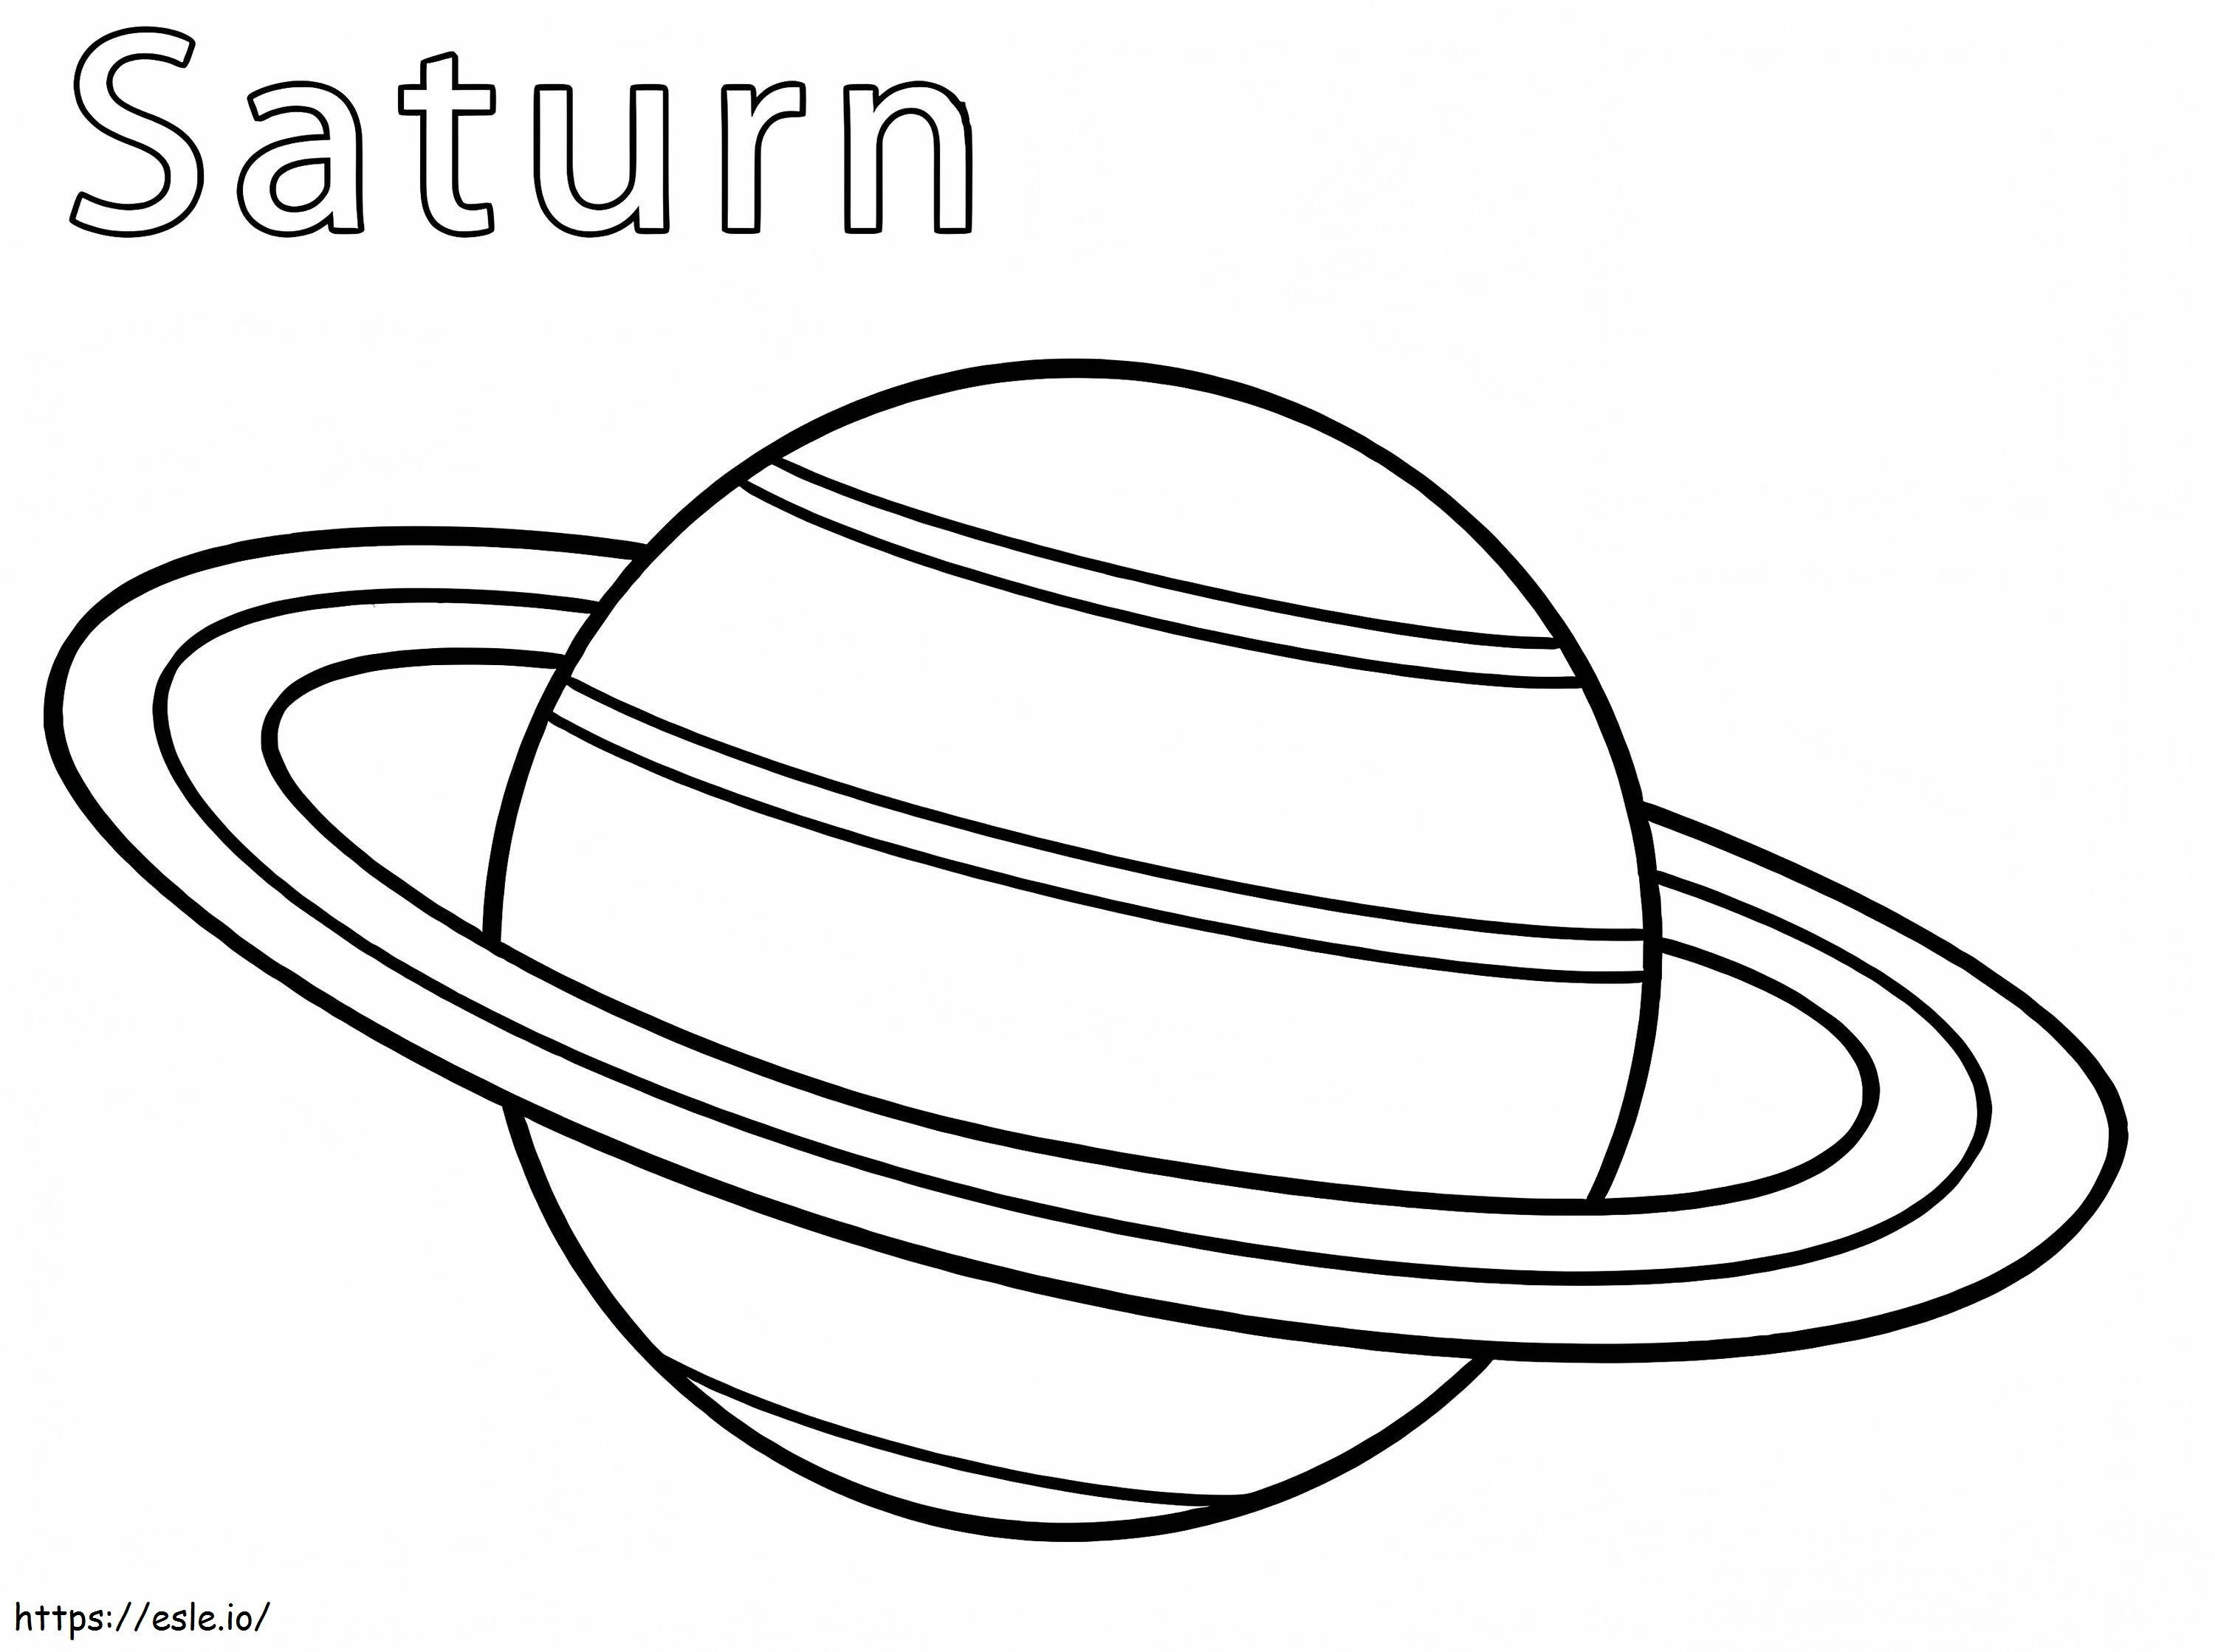 Planety Saturn kolorowanka